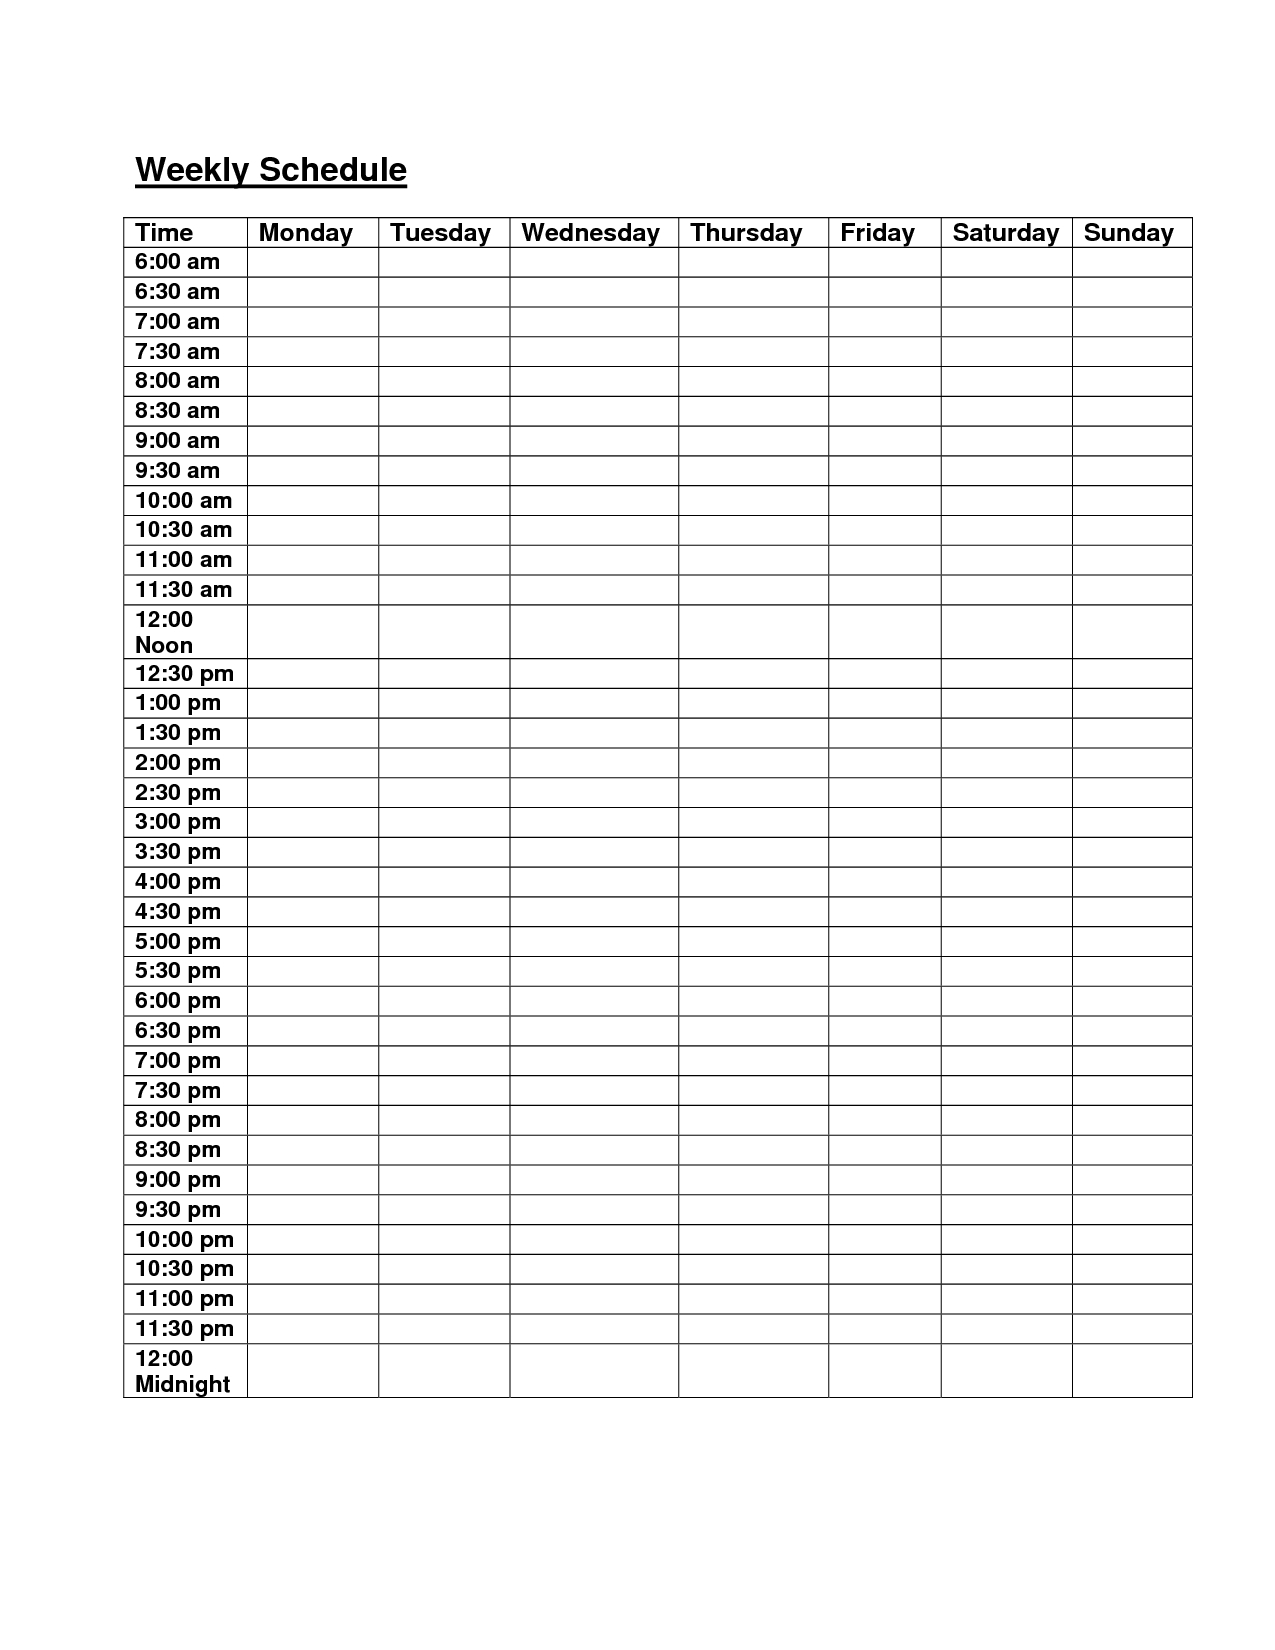 Monday - Friday Timetable Template | Example Calendar